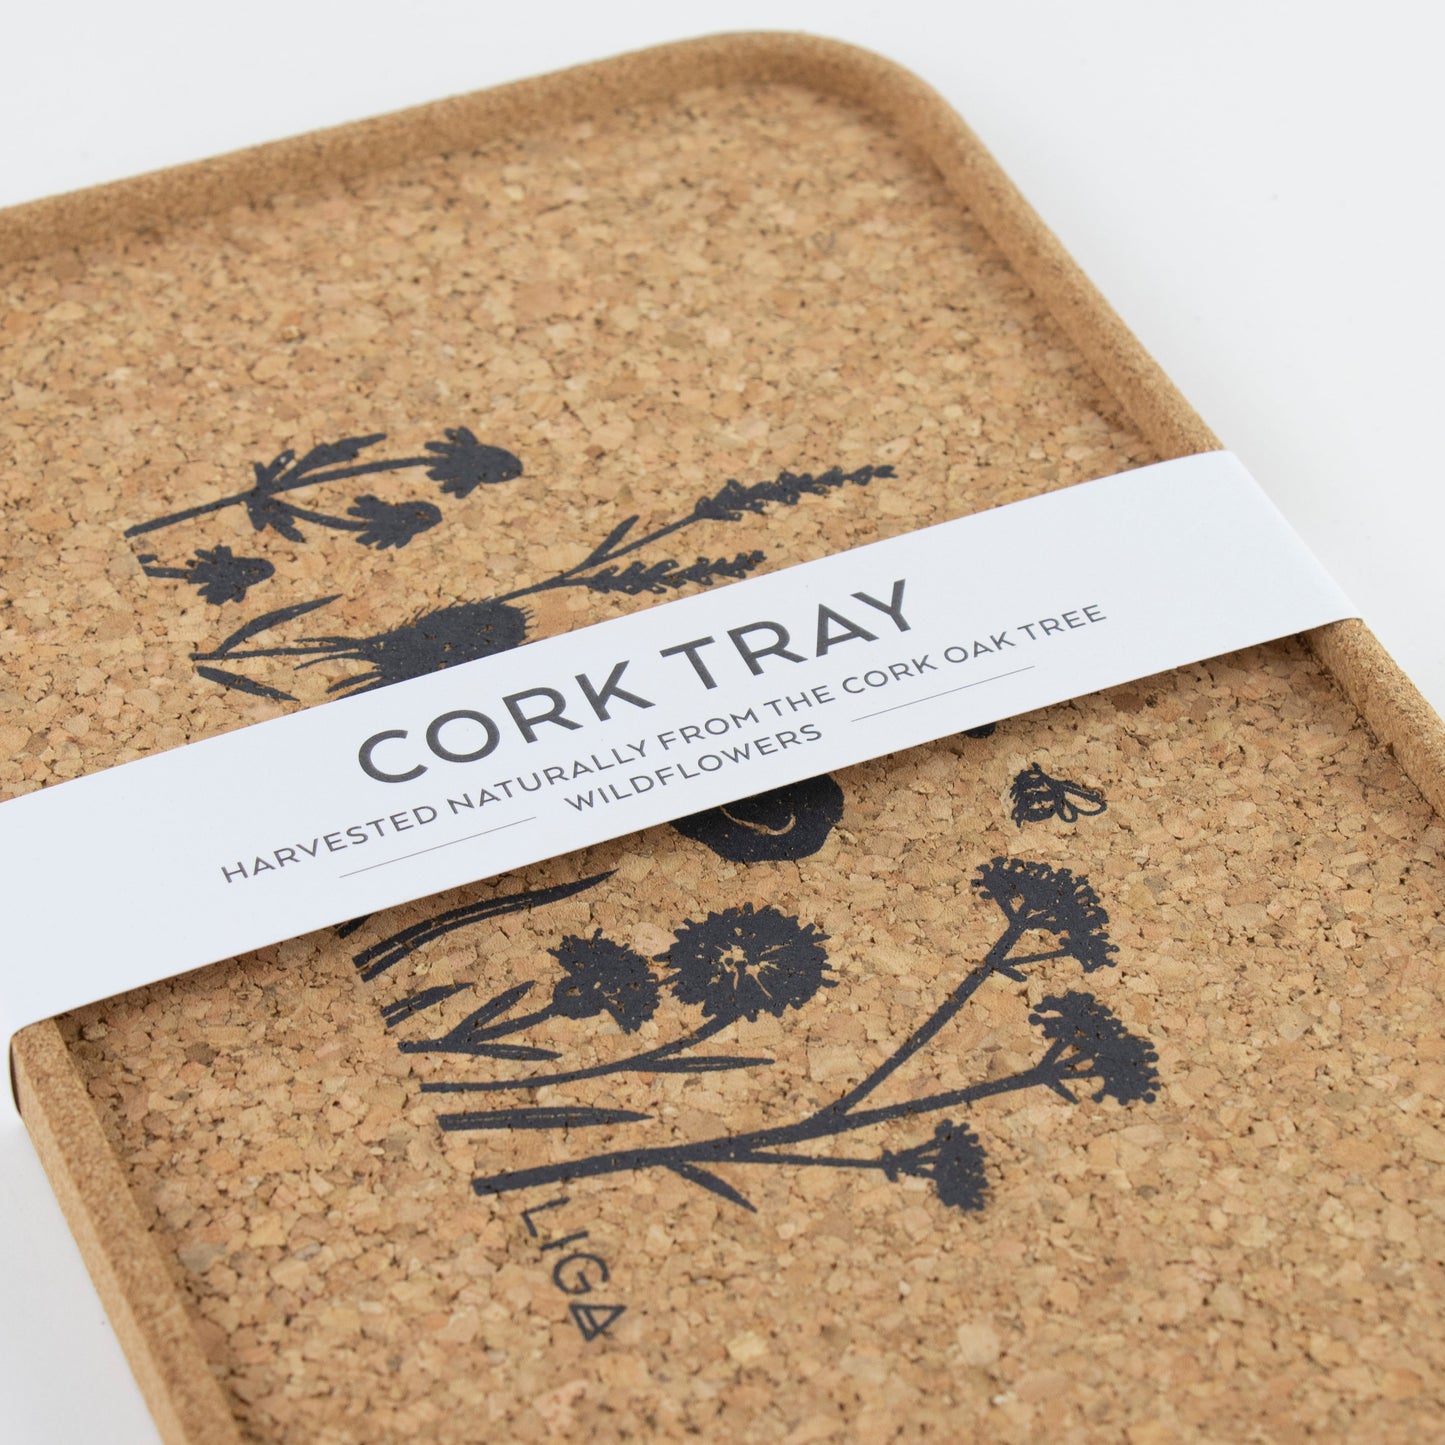 Cork Drinks Tray | Wildflower